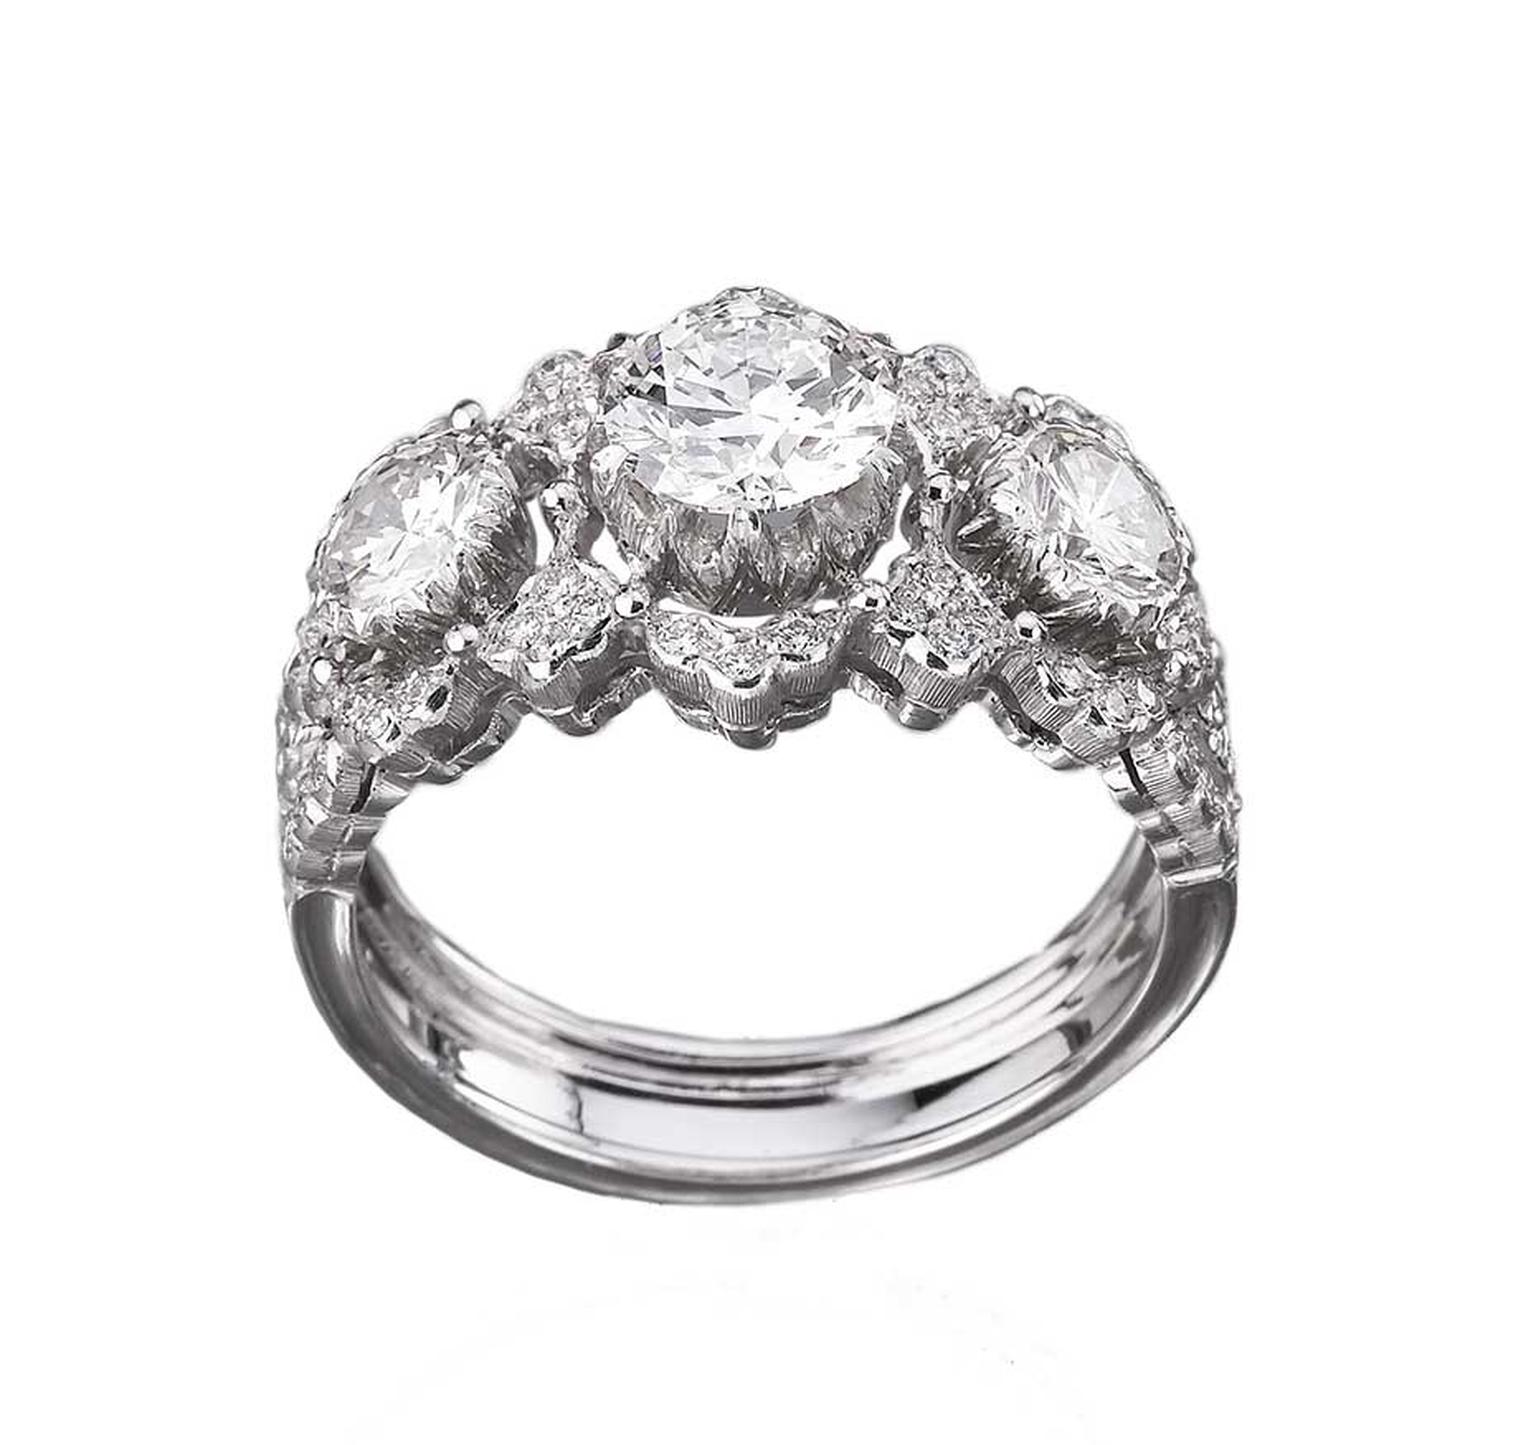 Buccellati Diamond Engagement Ring - Estate Diamond Jewelry | Buccellati  engagement ring, Jewelry, Beautiful jewelry